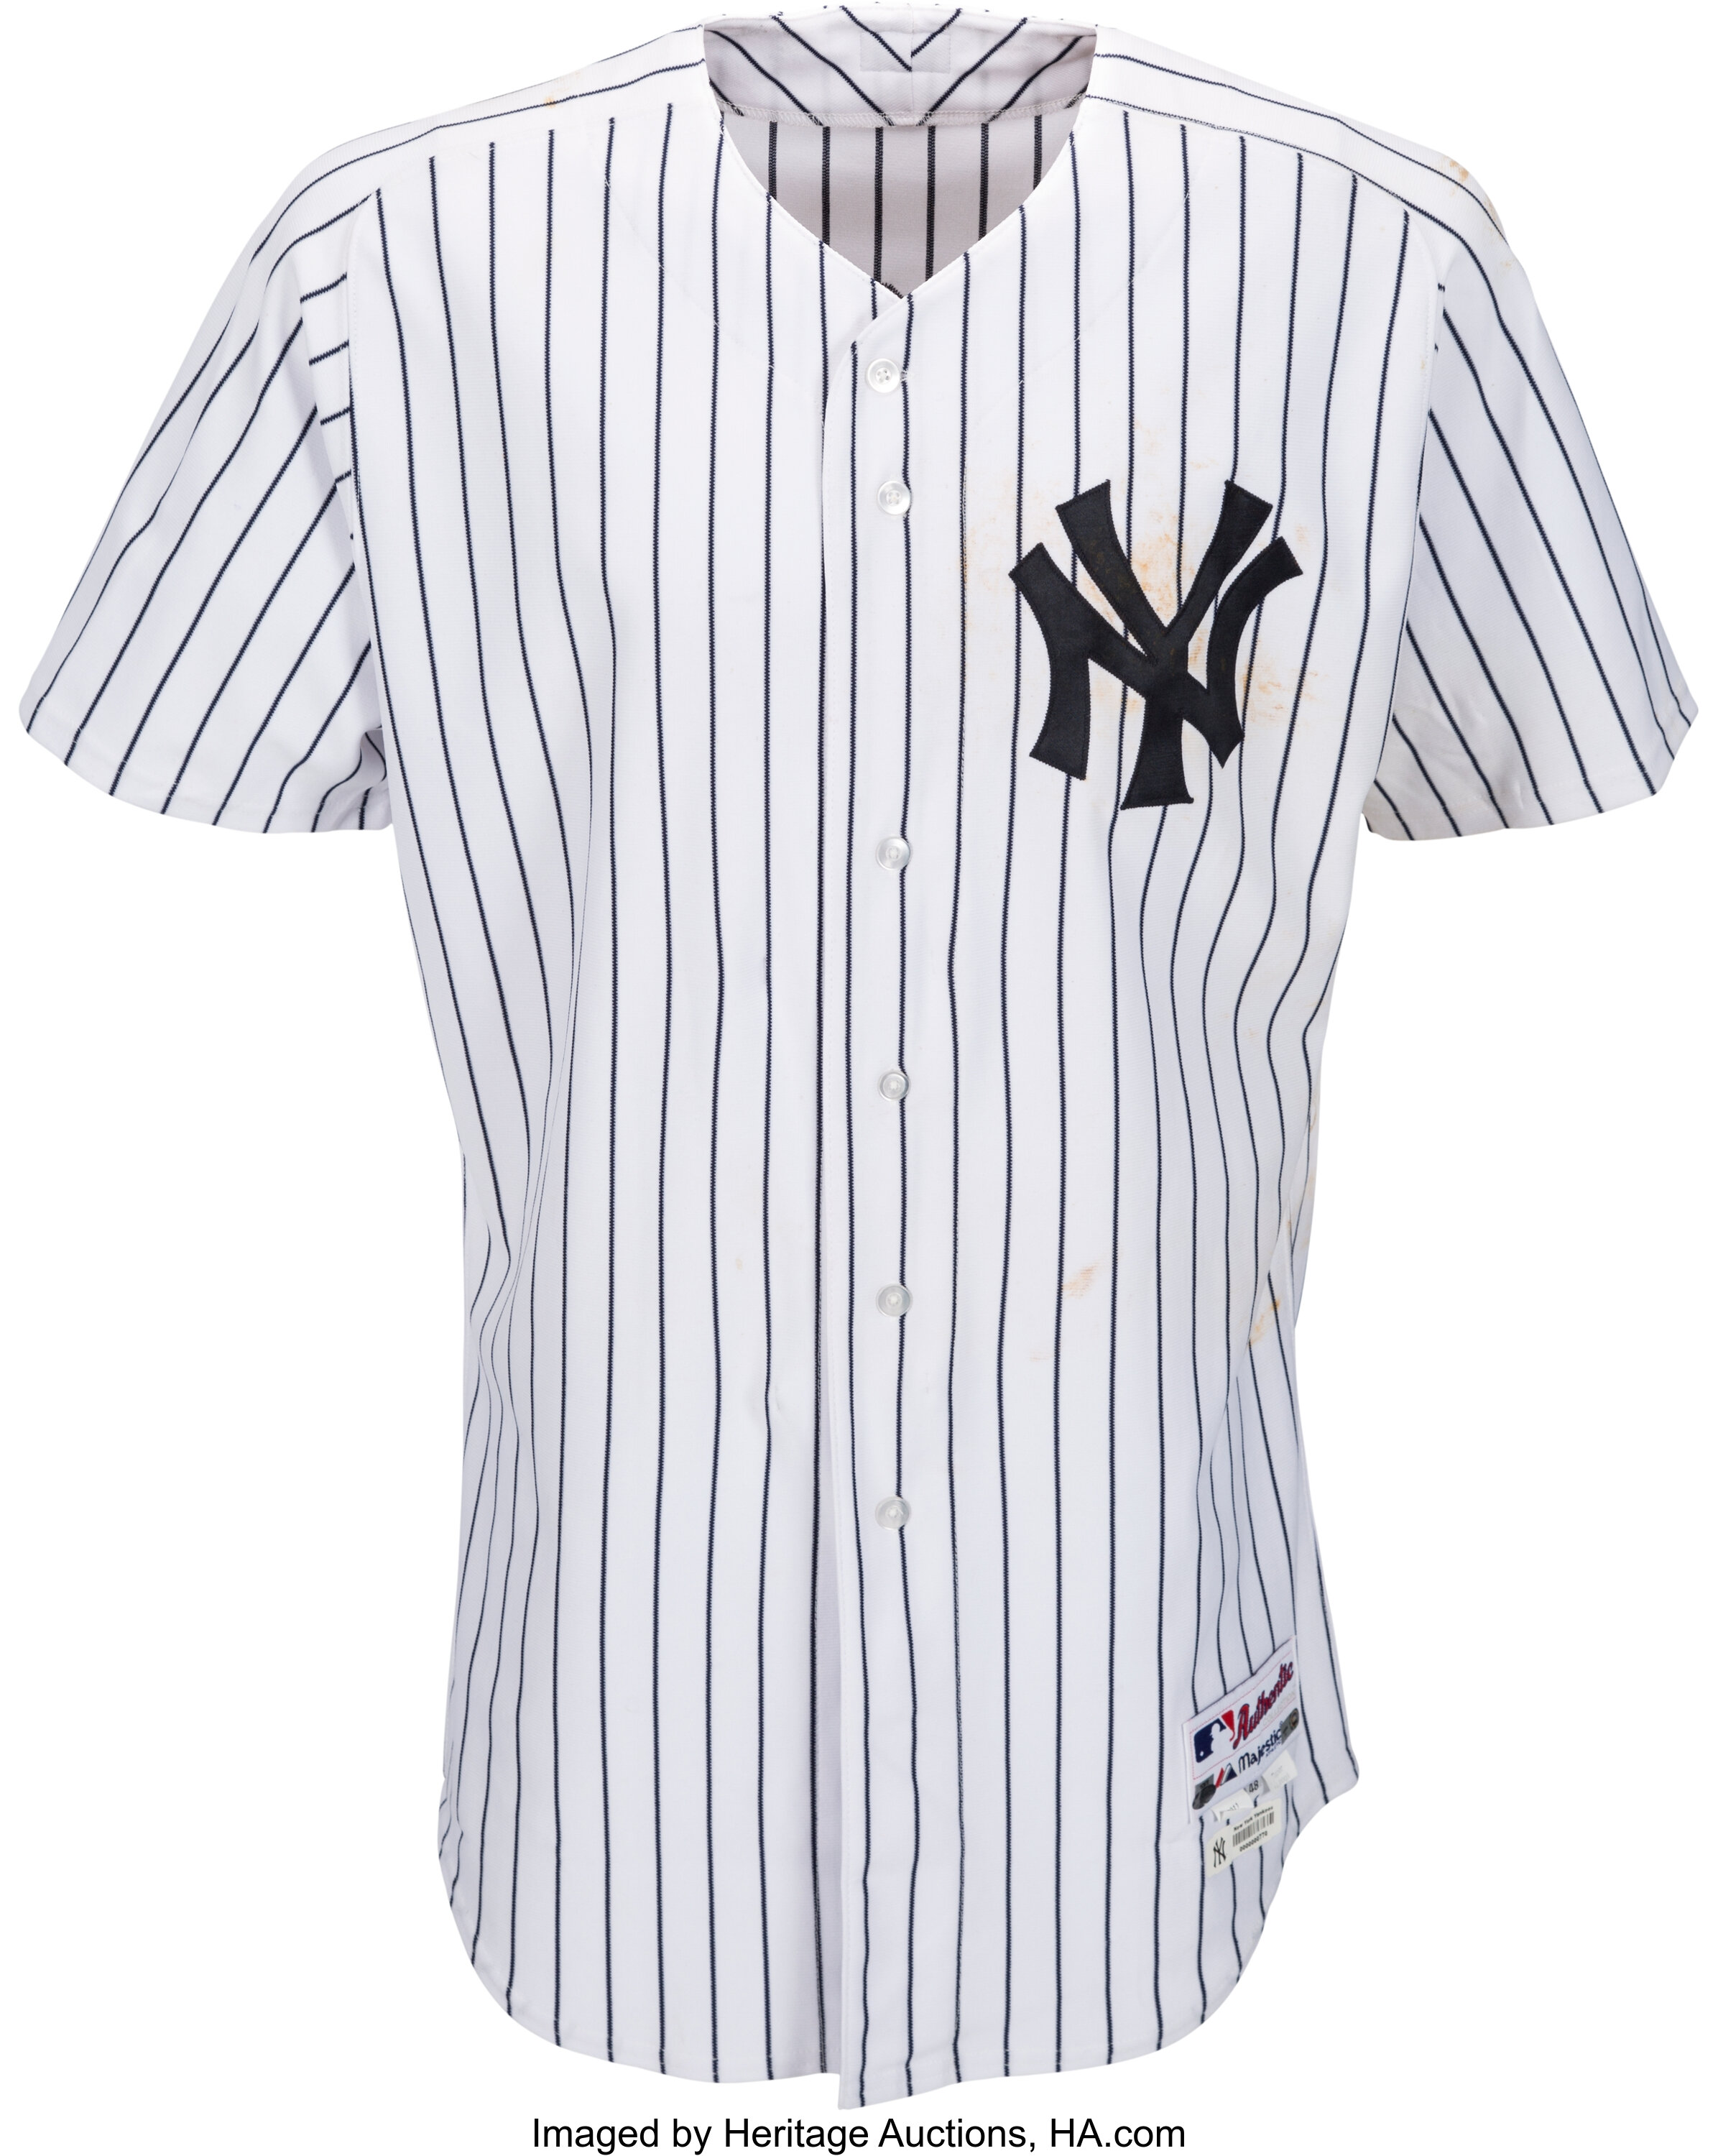 Alex Rodriguez Game-Used New York Yankees Majestic Jersey (Steiner LOA &  MLB Hologram)